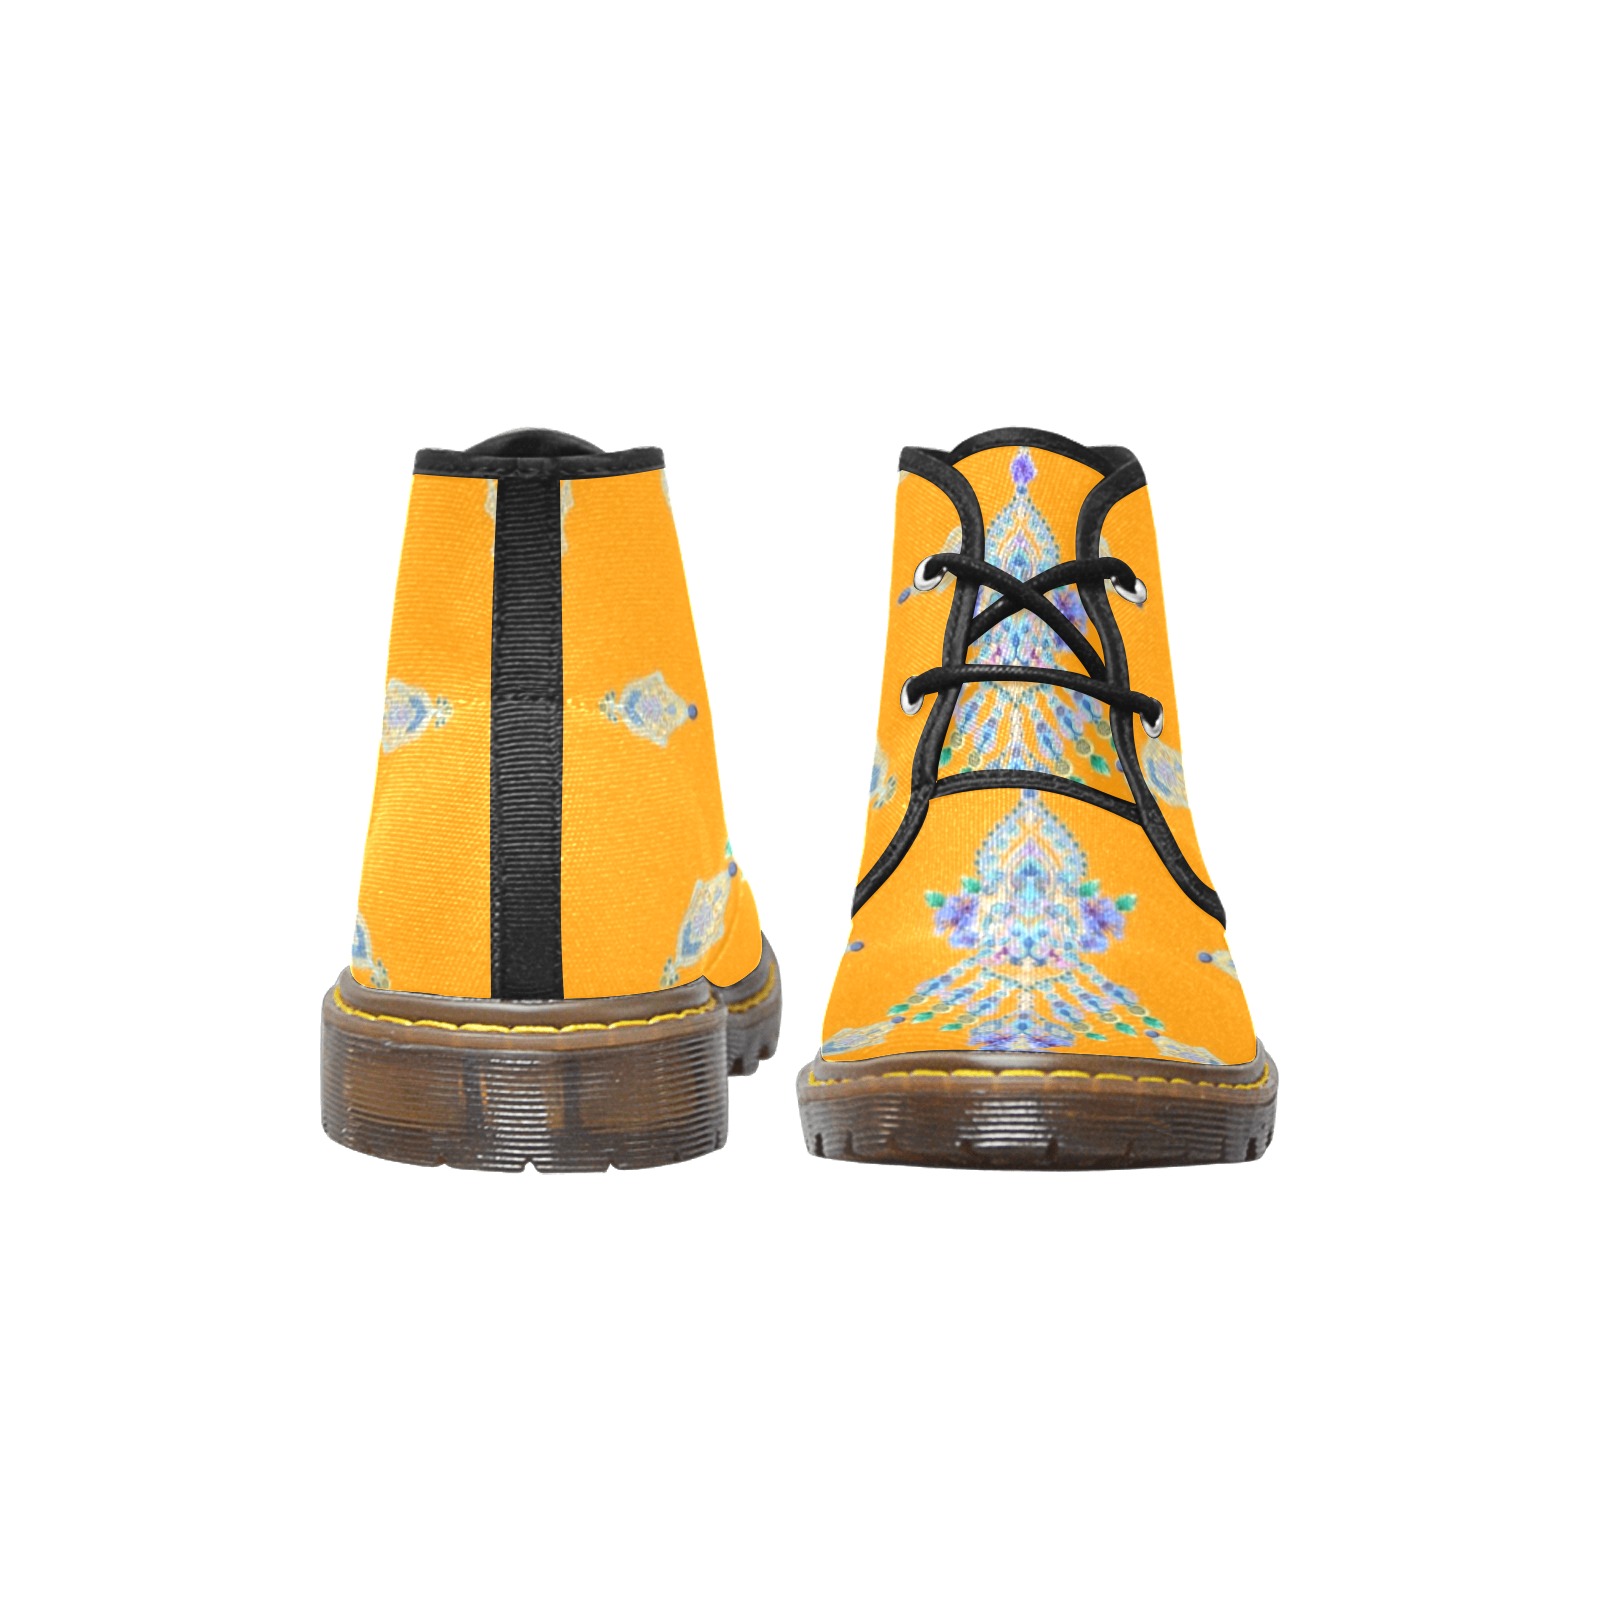 BLEUETS 12 Women's Canvas Chukka Boots (Model 2402-1)